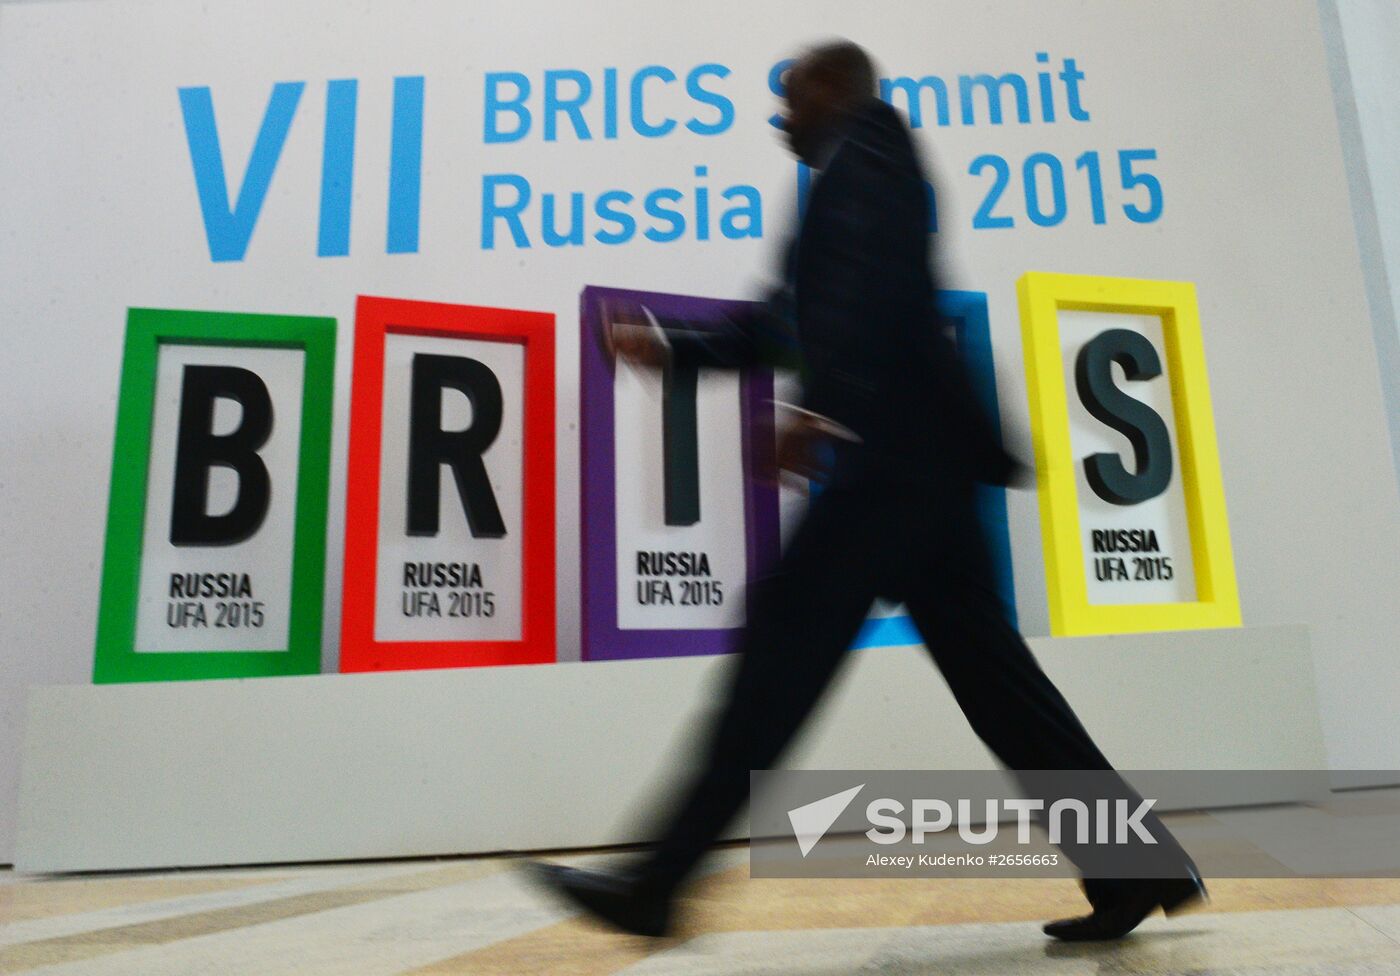 The logo of the BRICS Summit